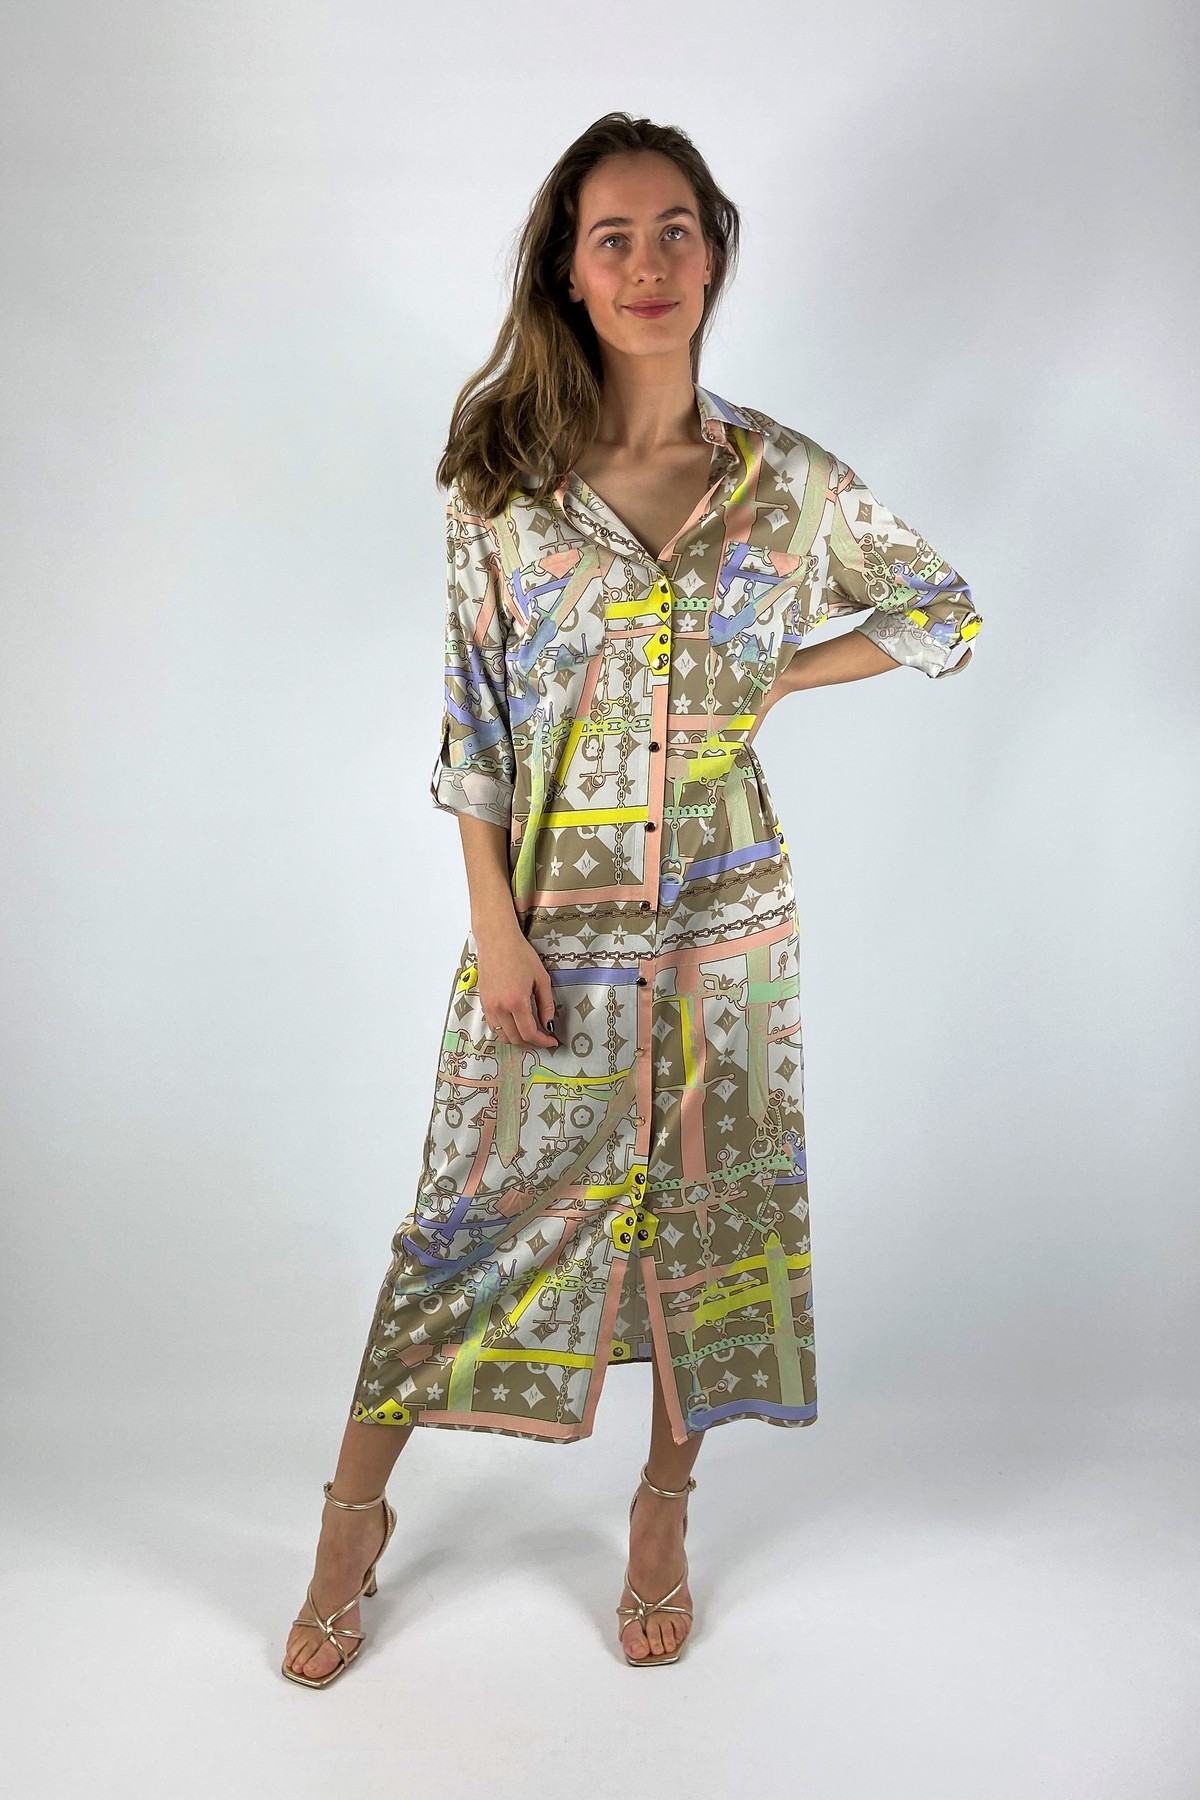 Mucho Gusto - Dress Cesaro 078 - Kleed lang kettingprint pastels